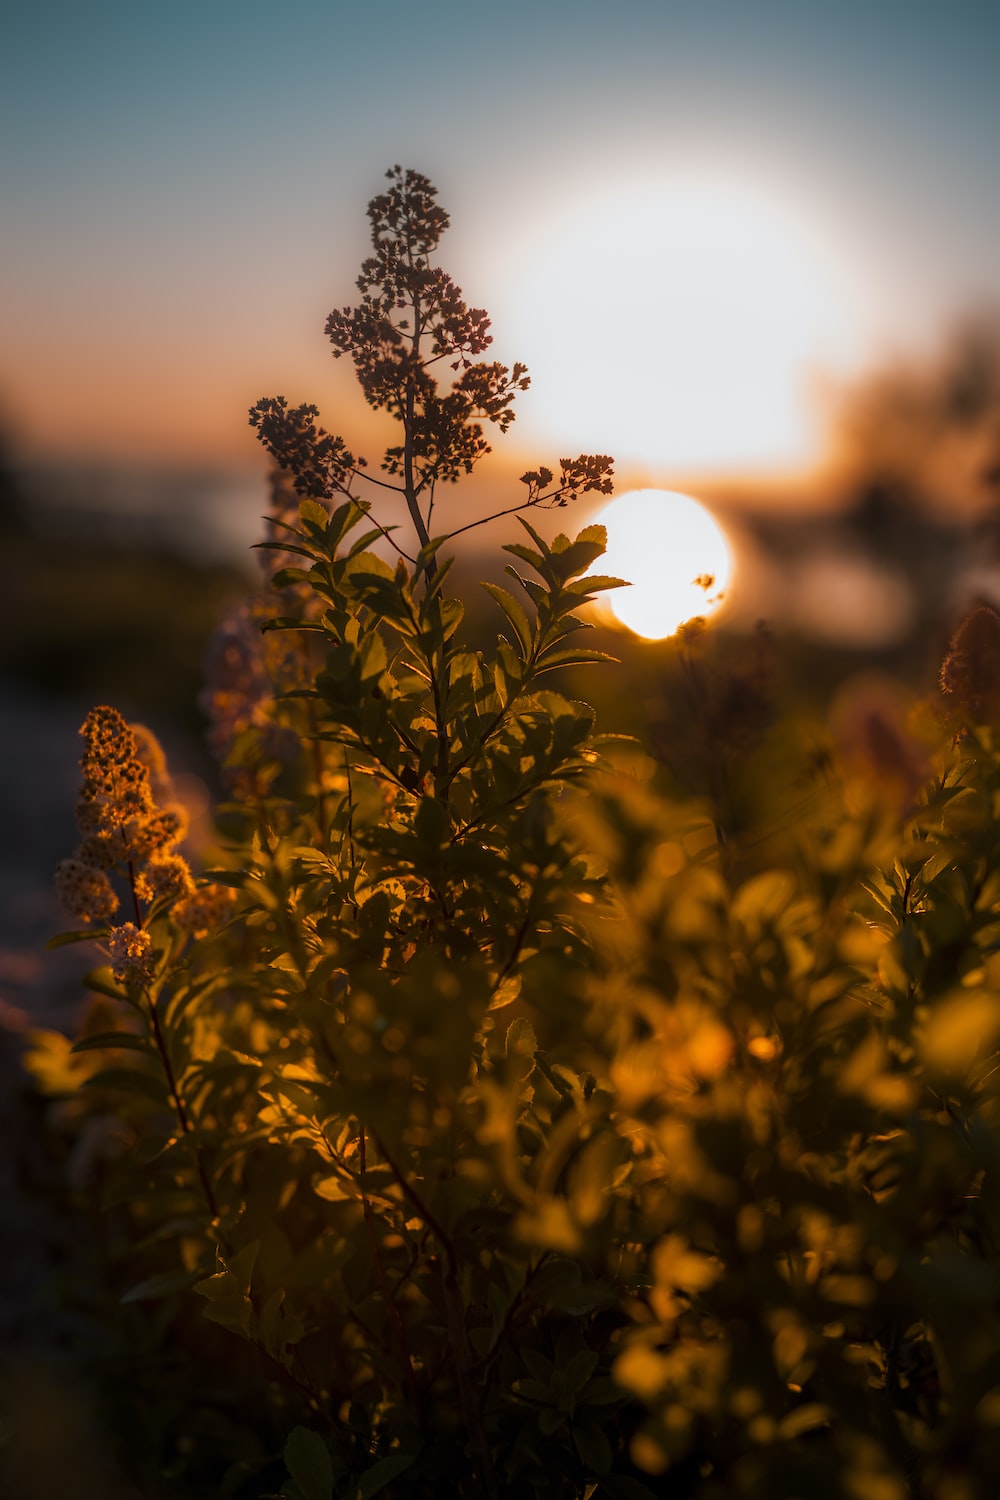 A sun setting behind a bush with small yellow flowers. - Sunshine, sunrise